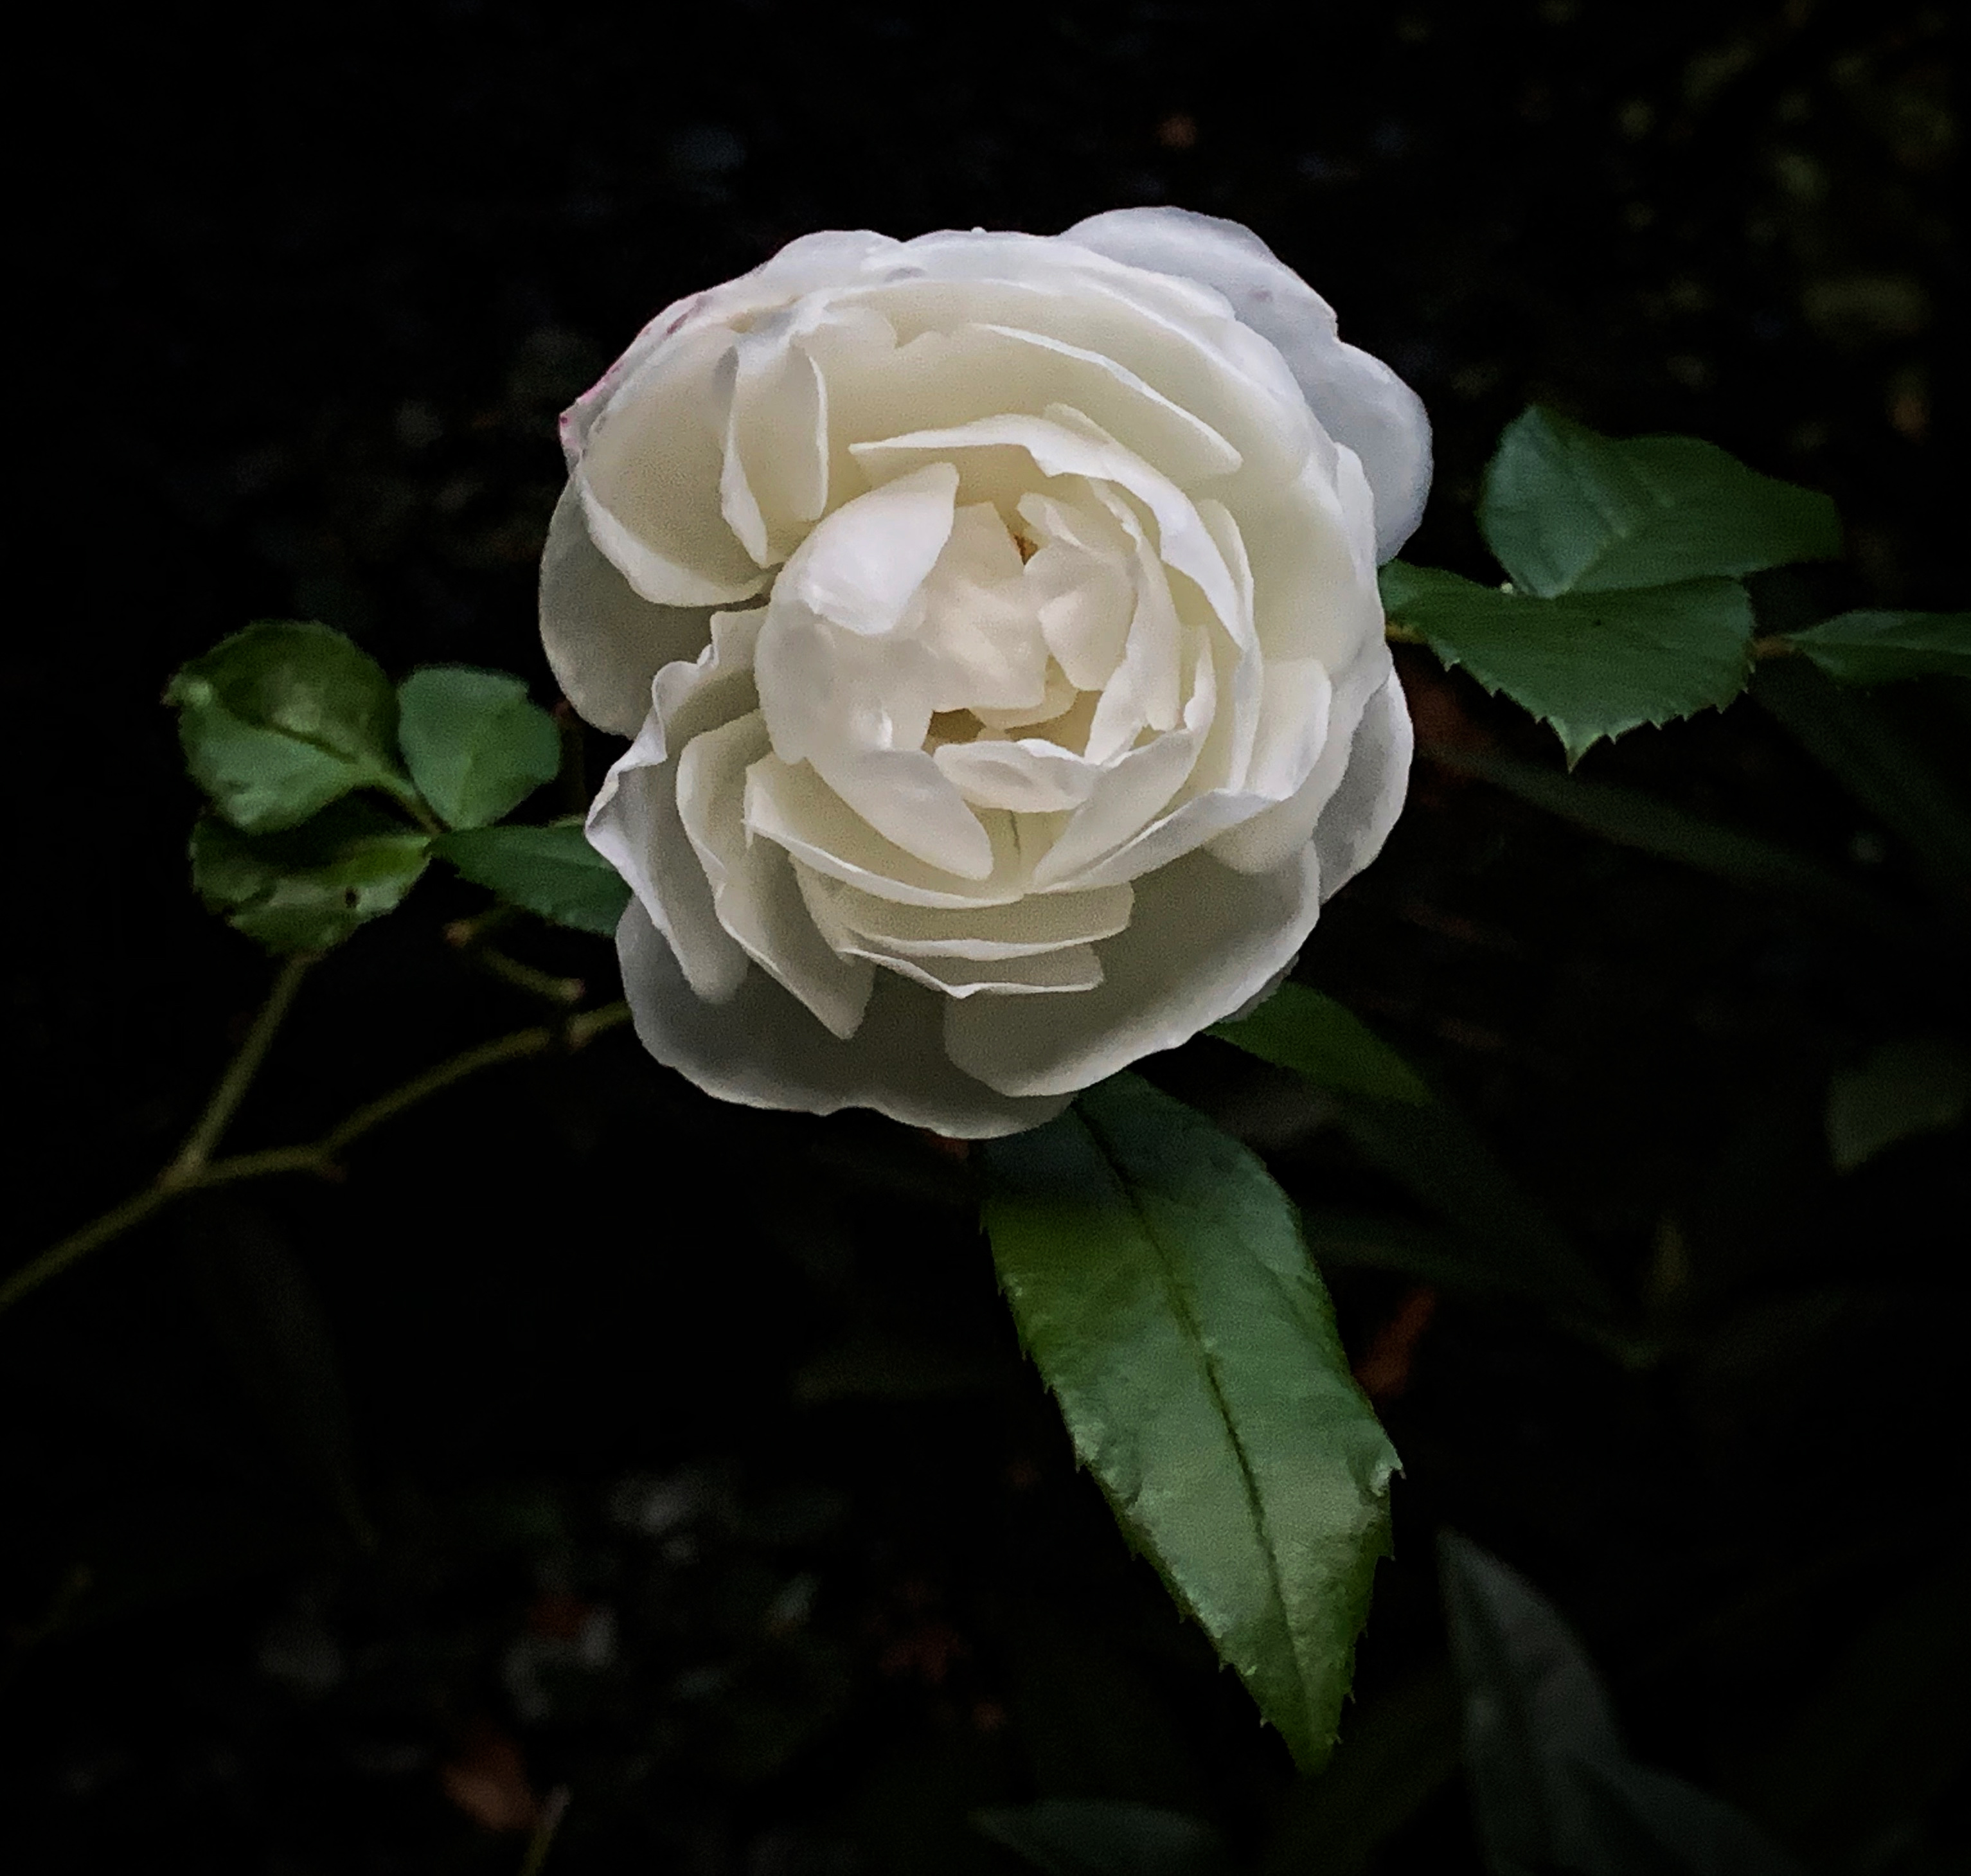 Day 283.3 – Last Rose